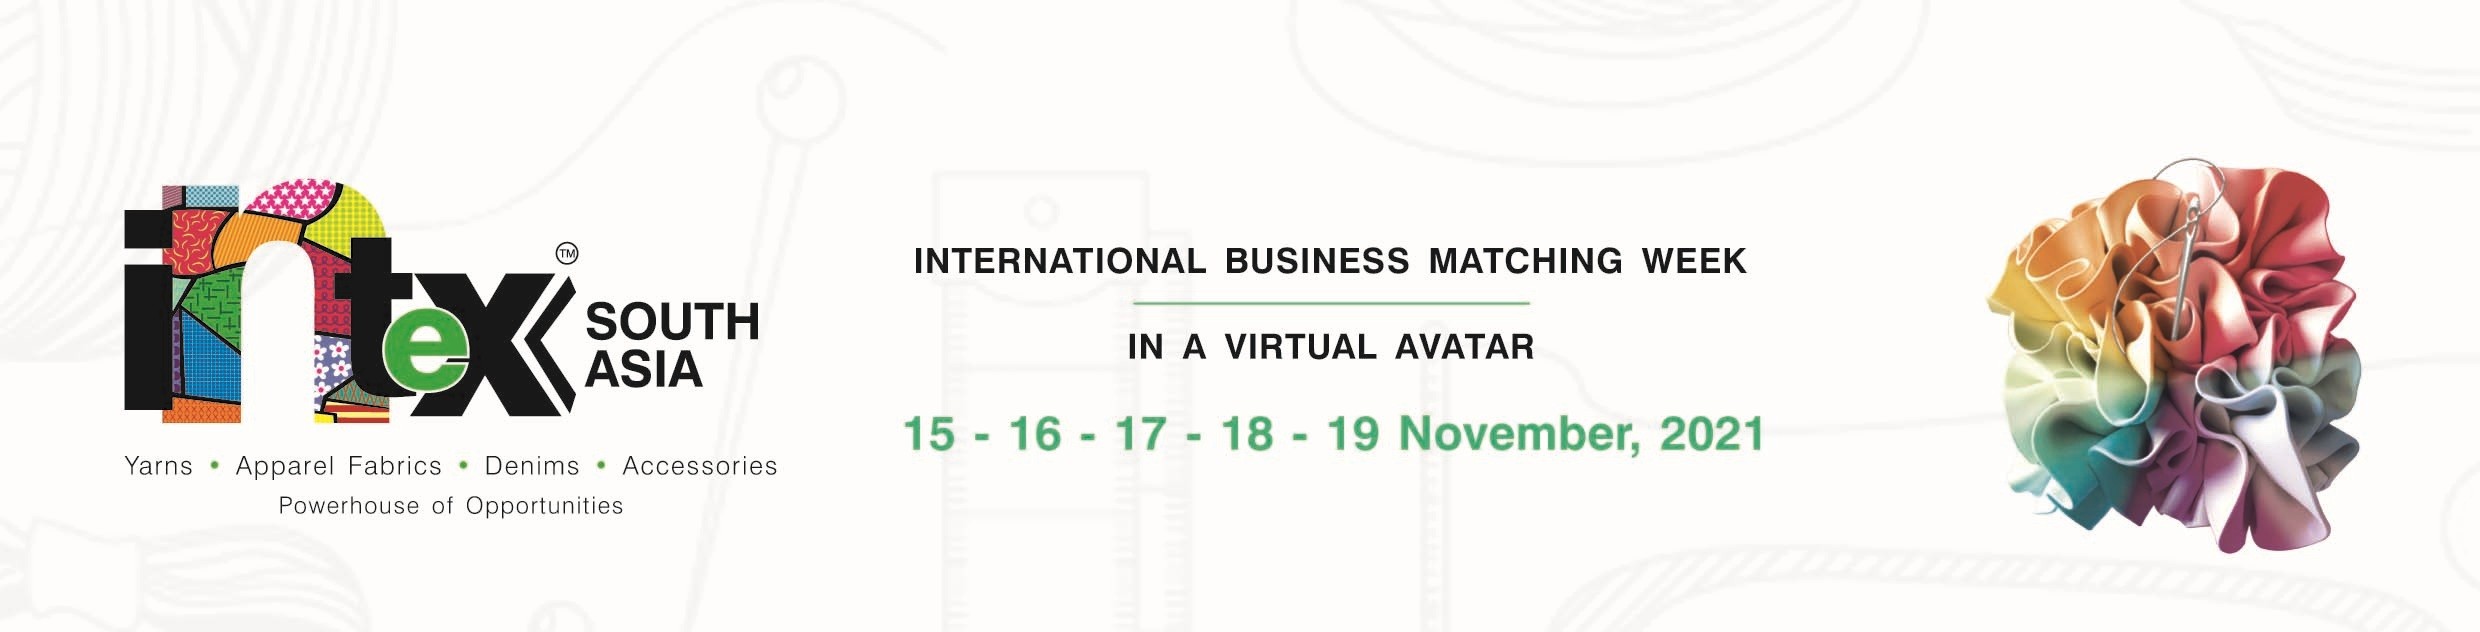 Intex South Asia International Business Matching Week